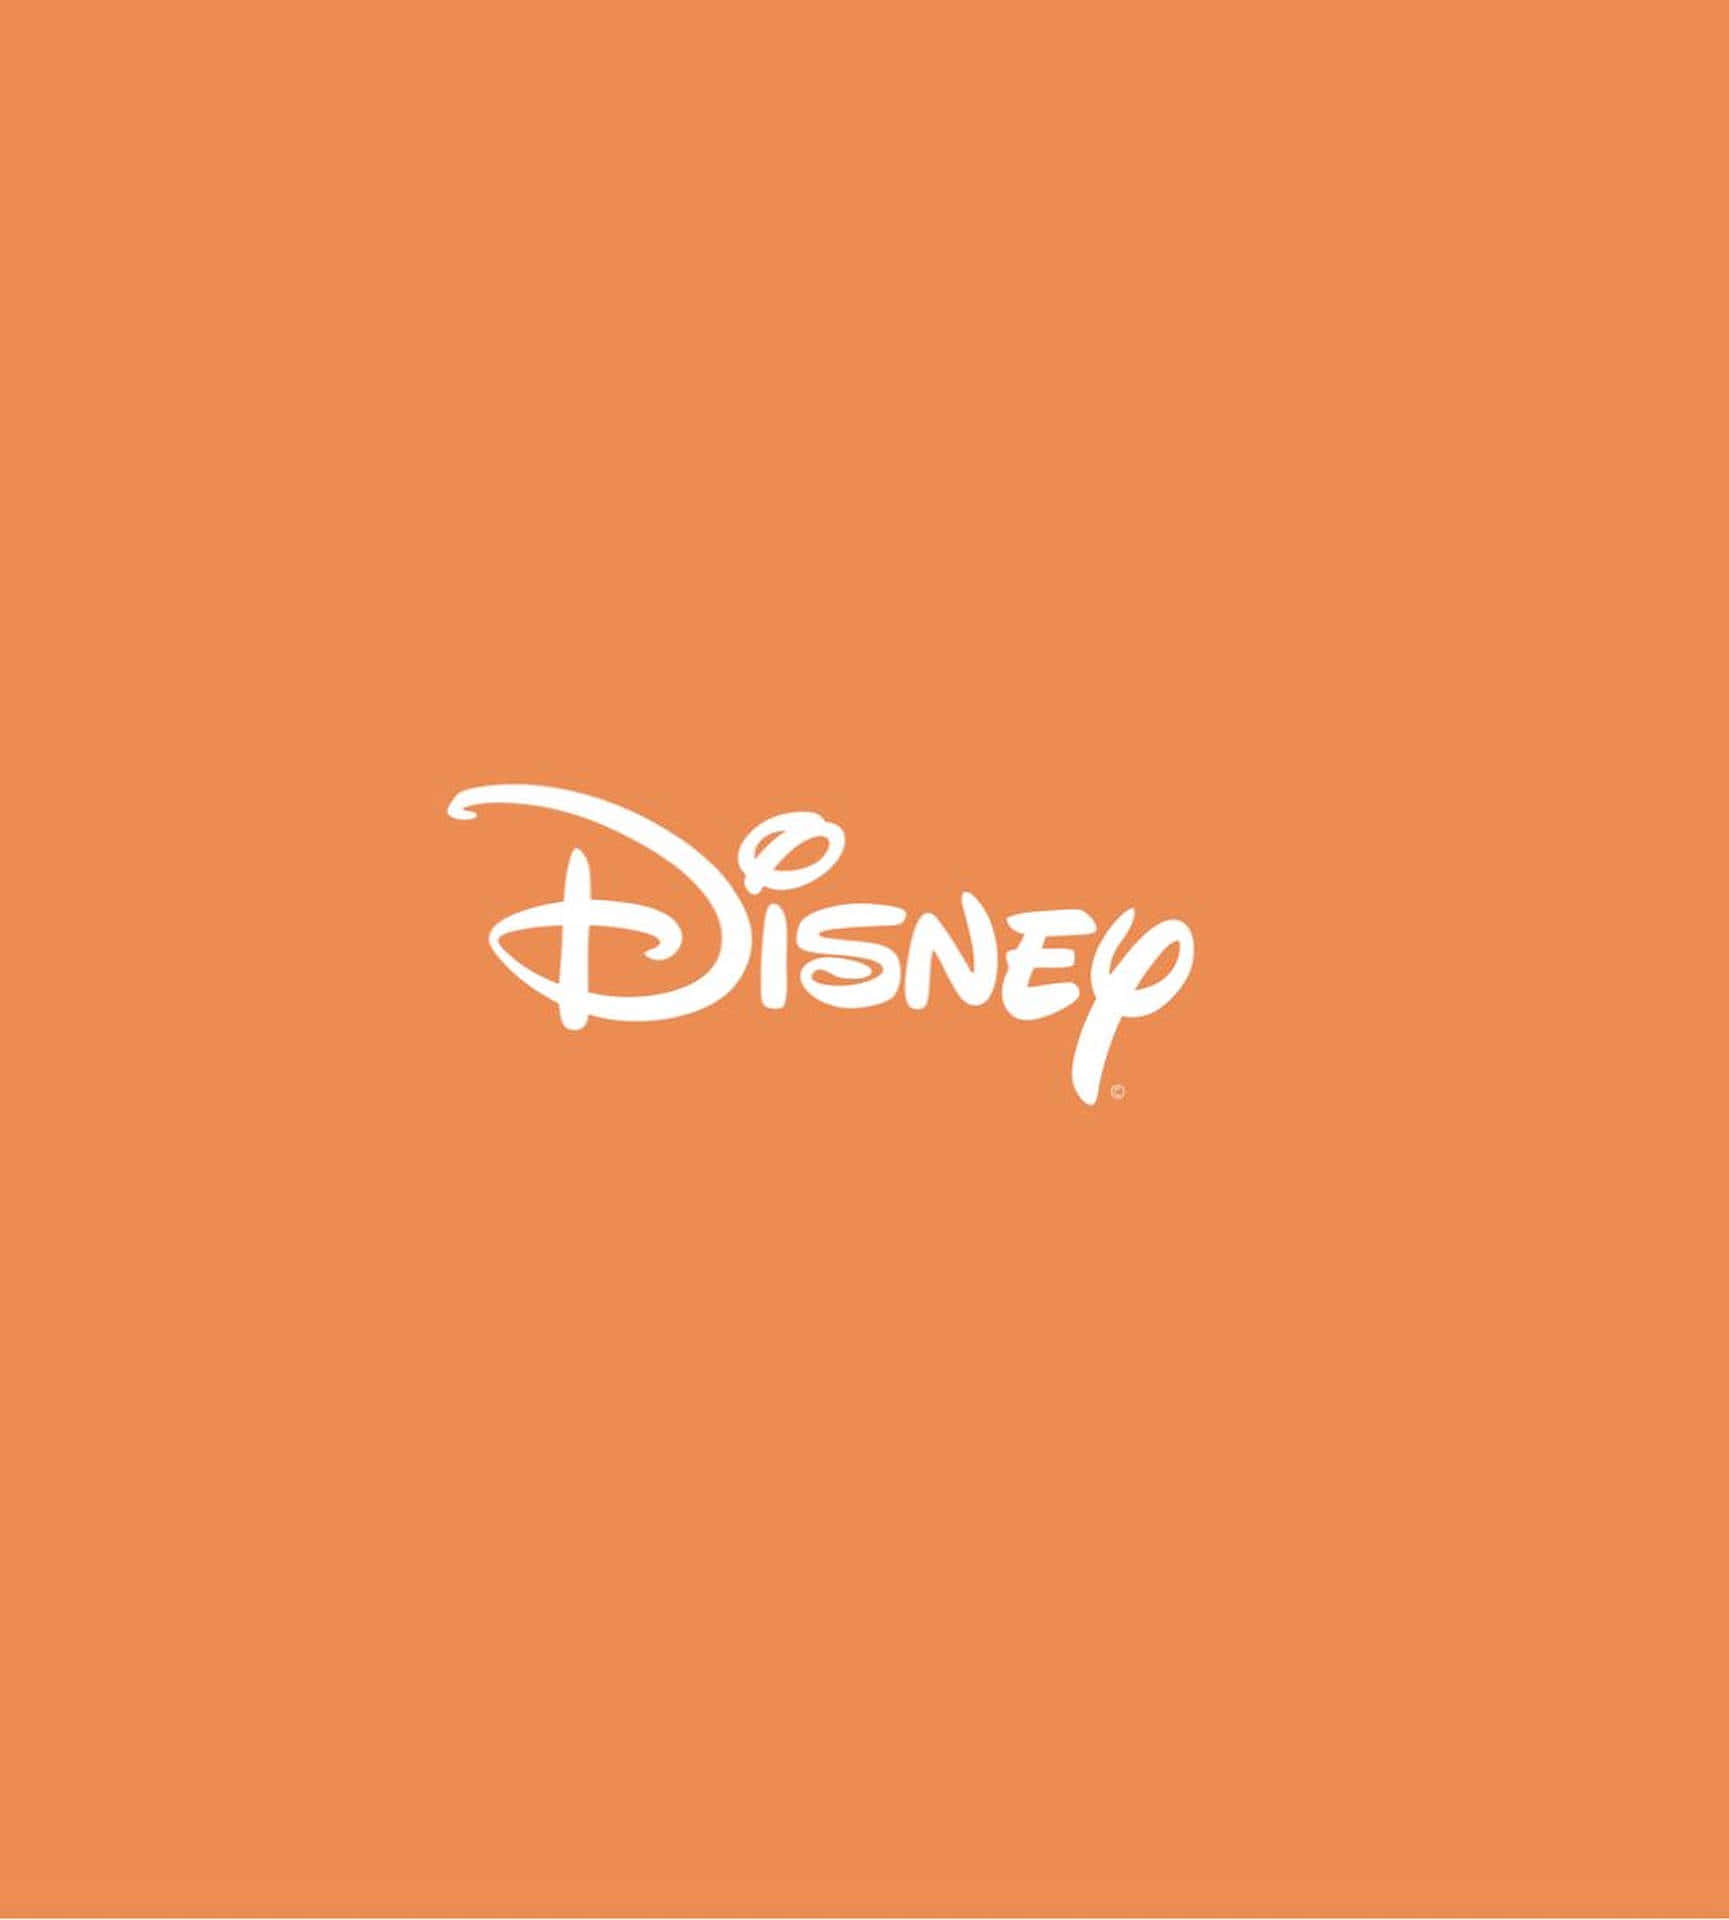 Ellogo De Disney Sobre Un Fondo Naranja. Fondo de pantalla